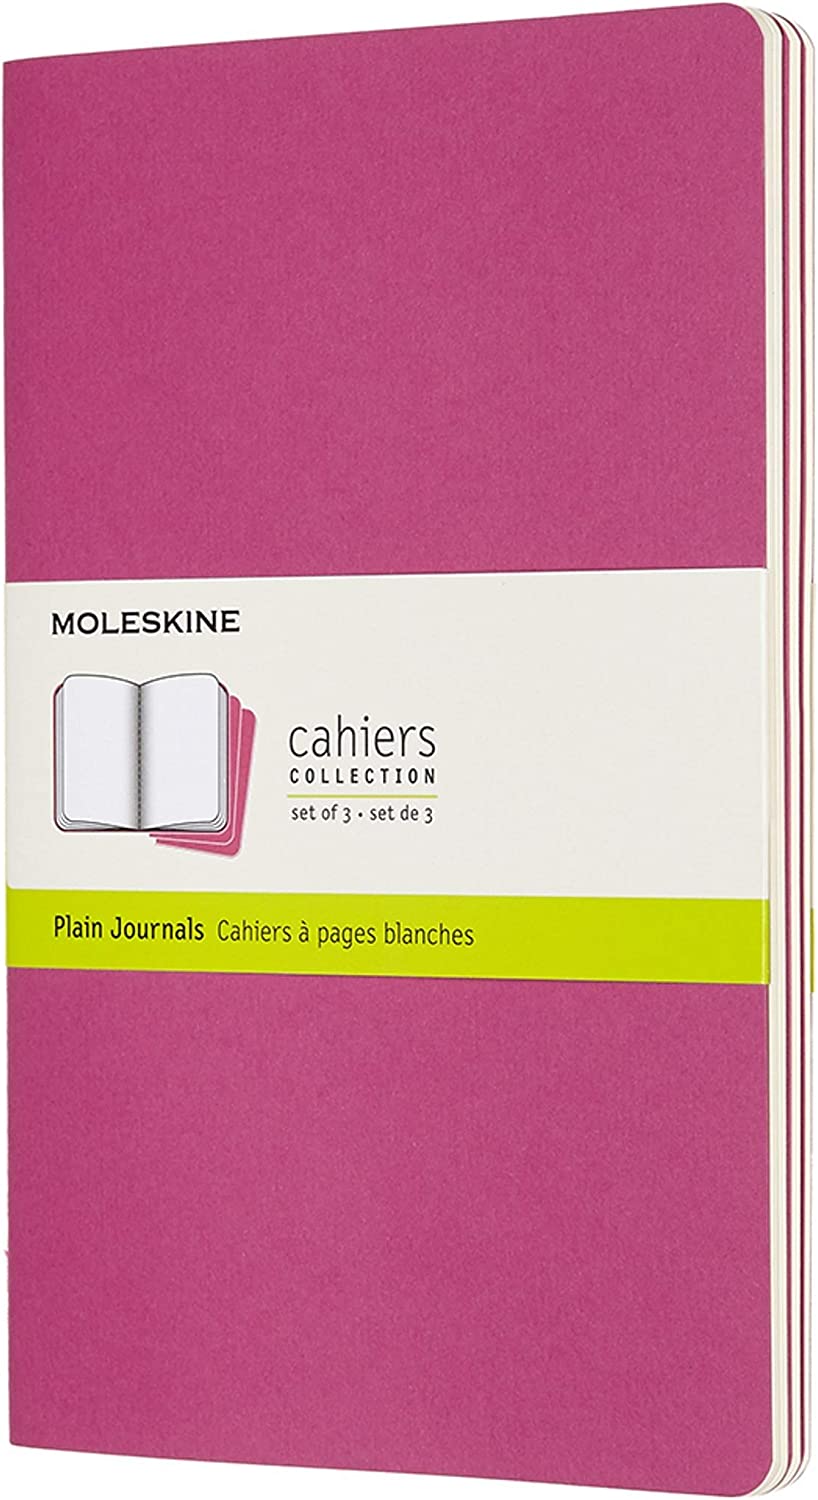 Moleskine Papir Pocket / Pink Moleskine Cahiers Journals - Plain